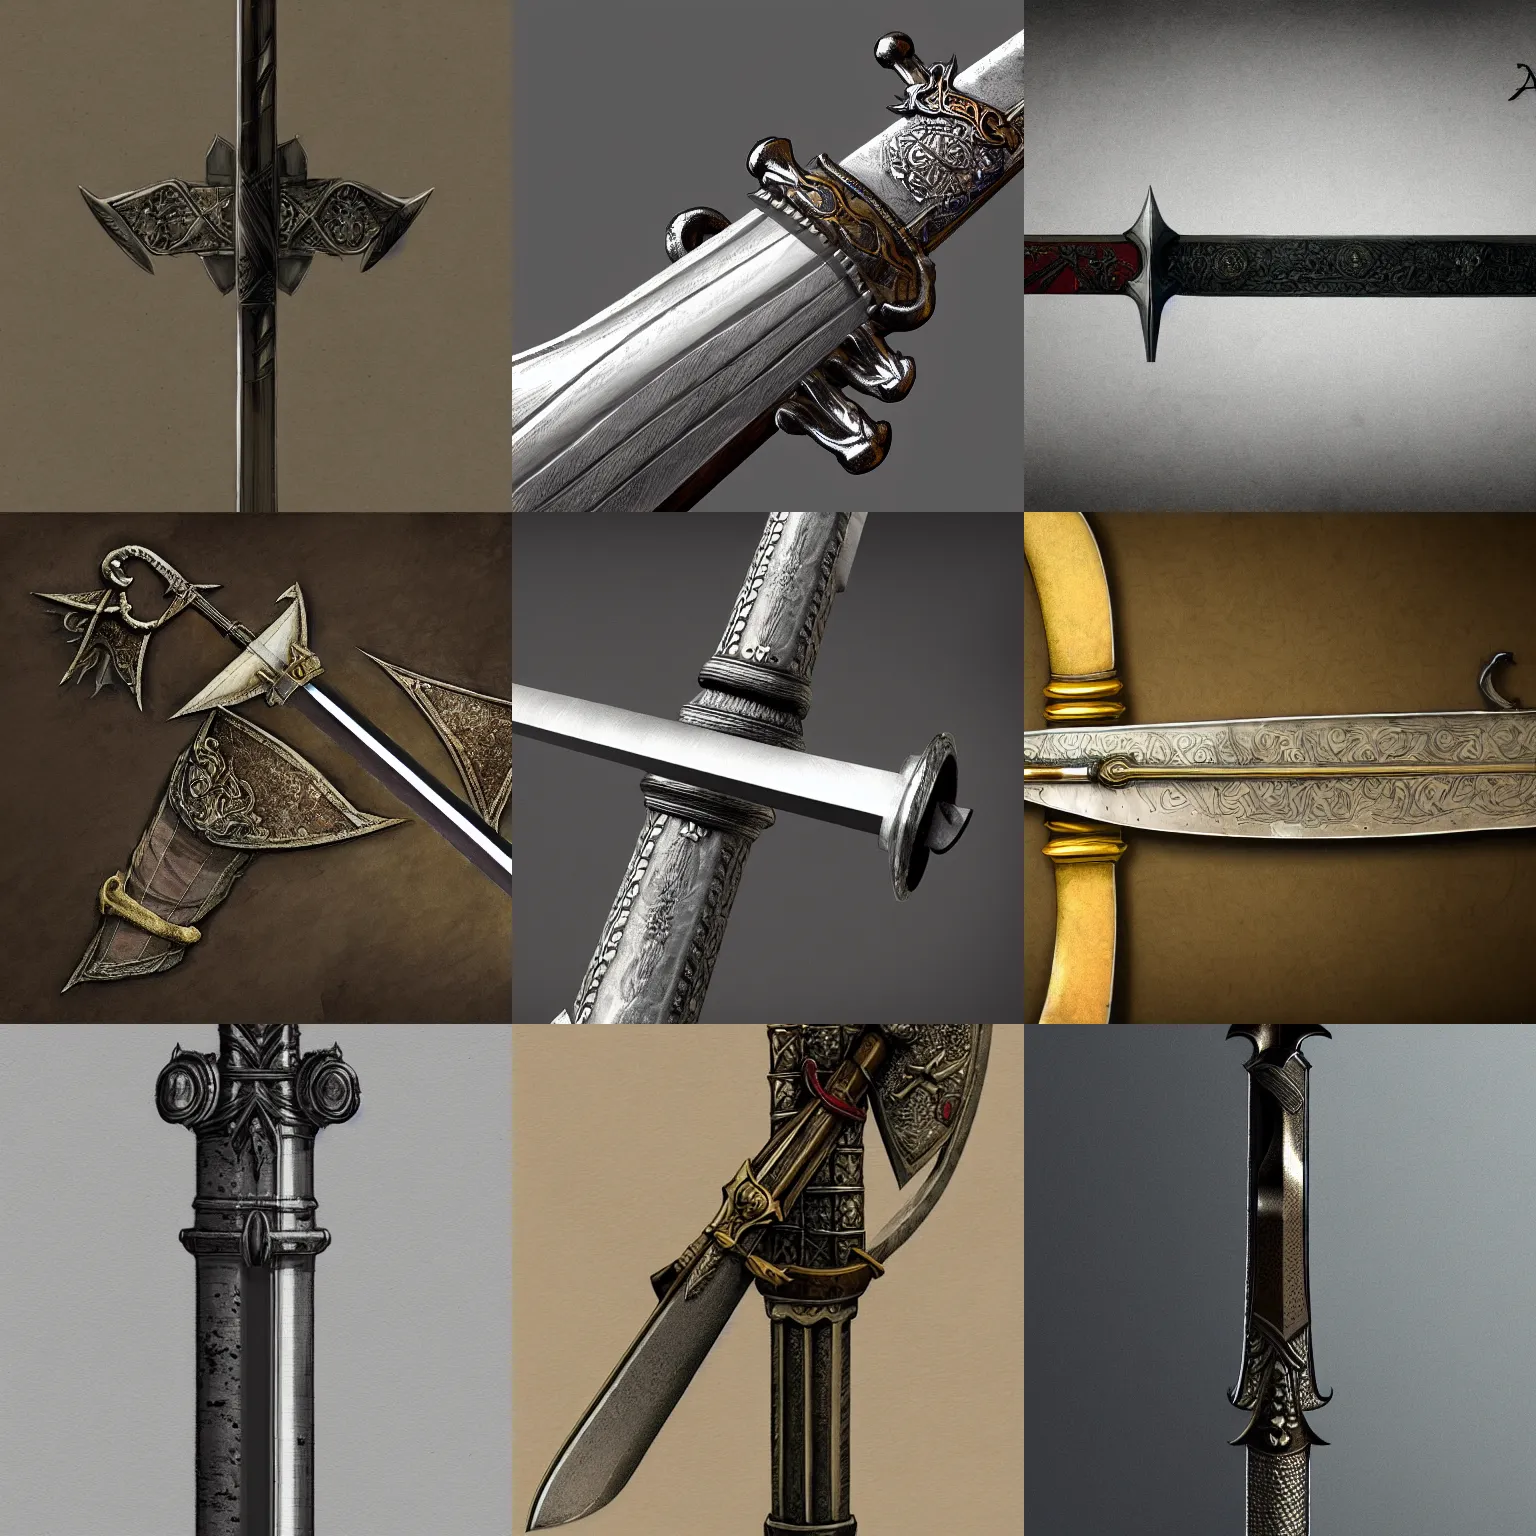 Prompt: medieval sword in arms room, highly detailed, artstation, concept art, sharp focus, rutkoswki, jurgens